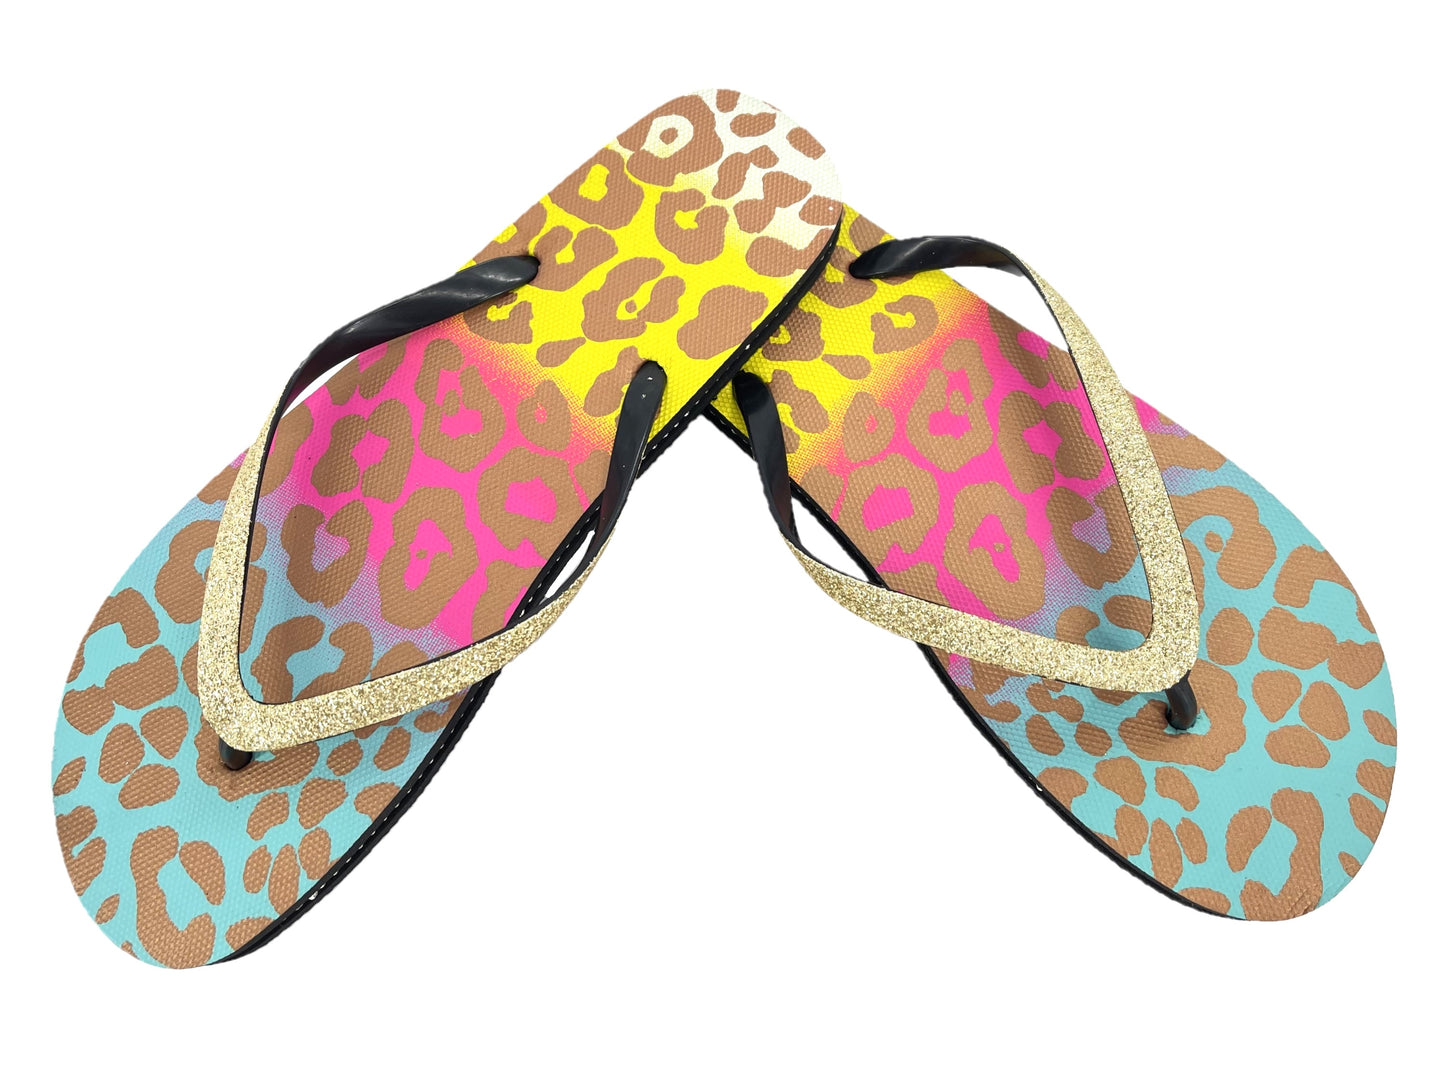 Ladies Leopard Print Glittery Strap Summer Flip Flops Beach Sandals with Diamantes